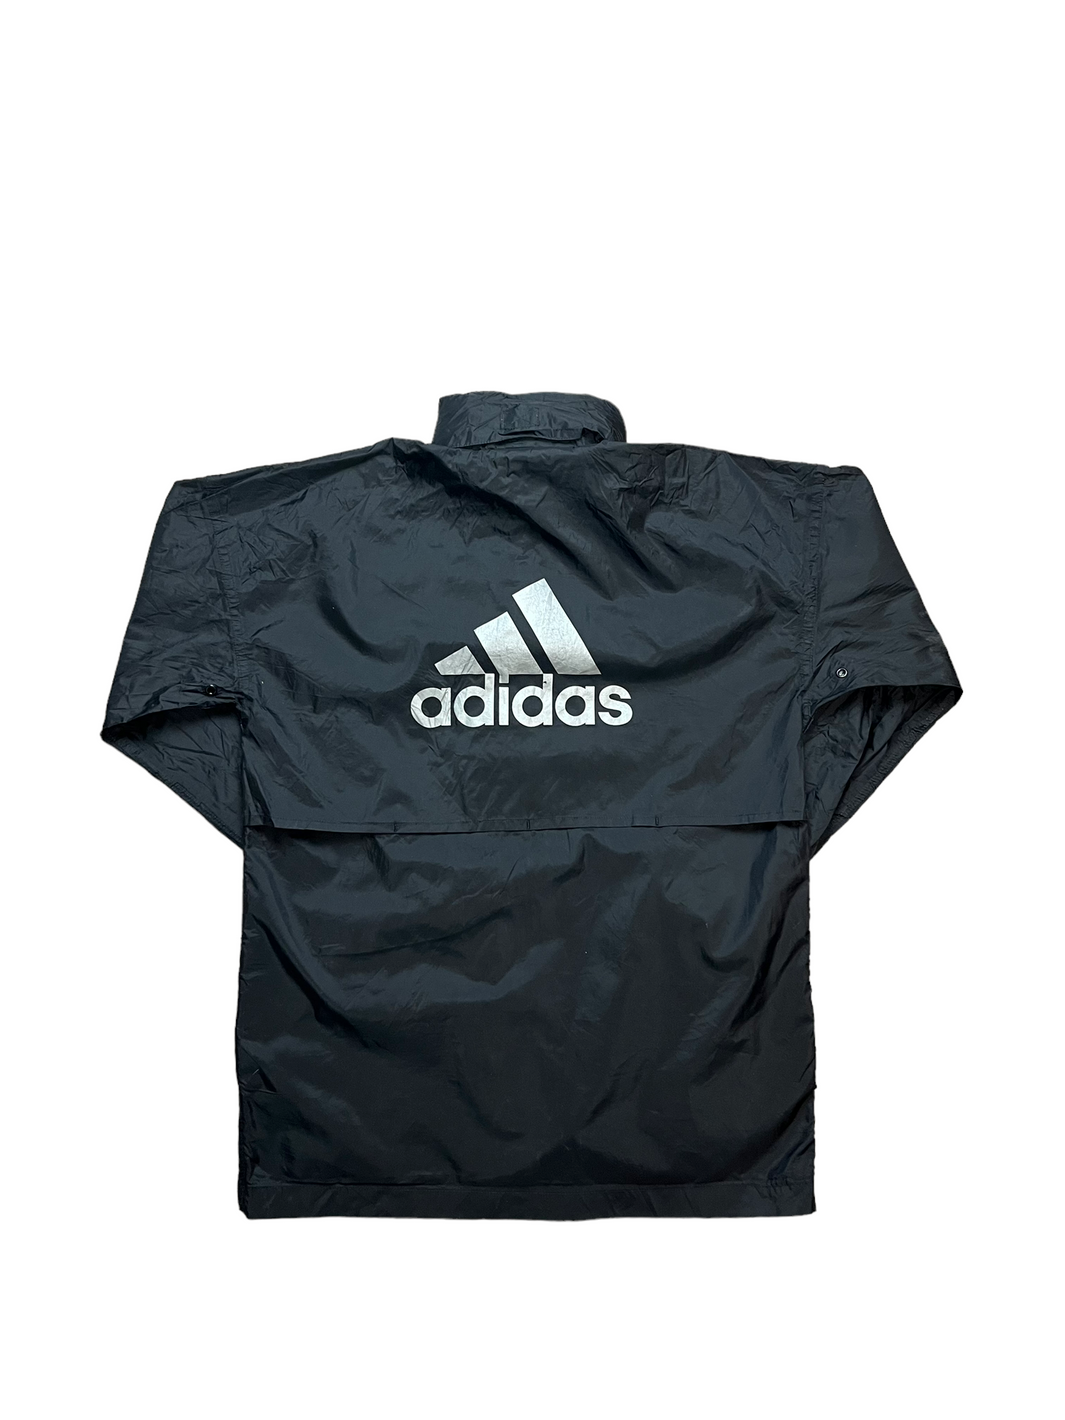 Adidas light Jacket